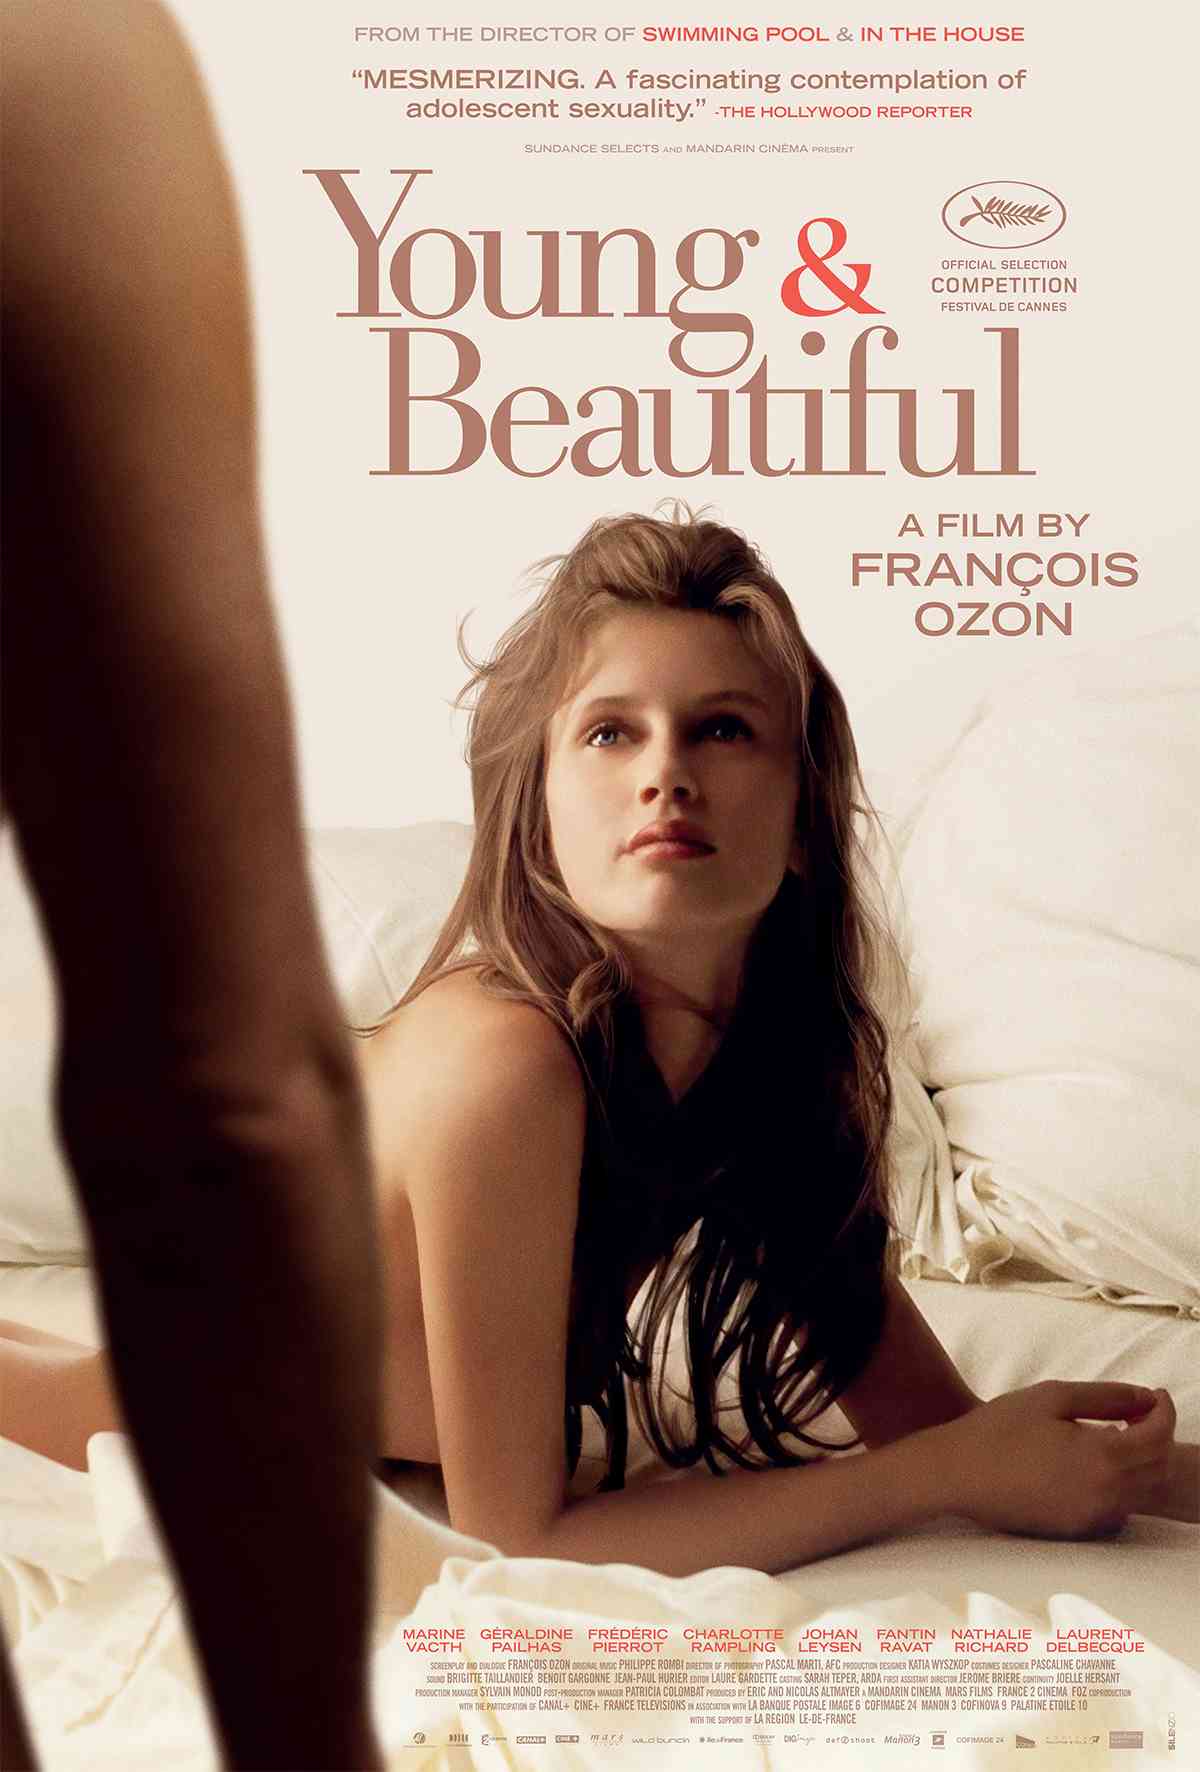 FULL MOVIE: Young & Beautiful (2013) [Romance]